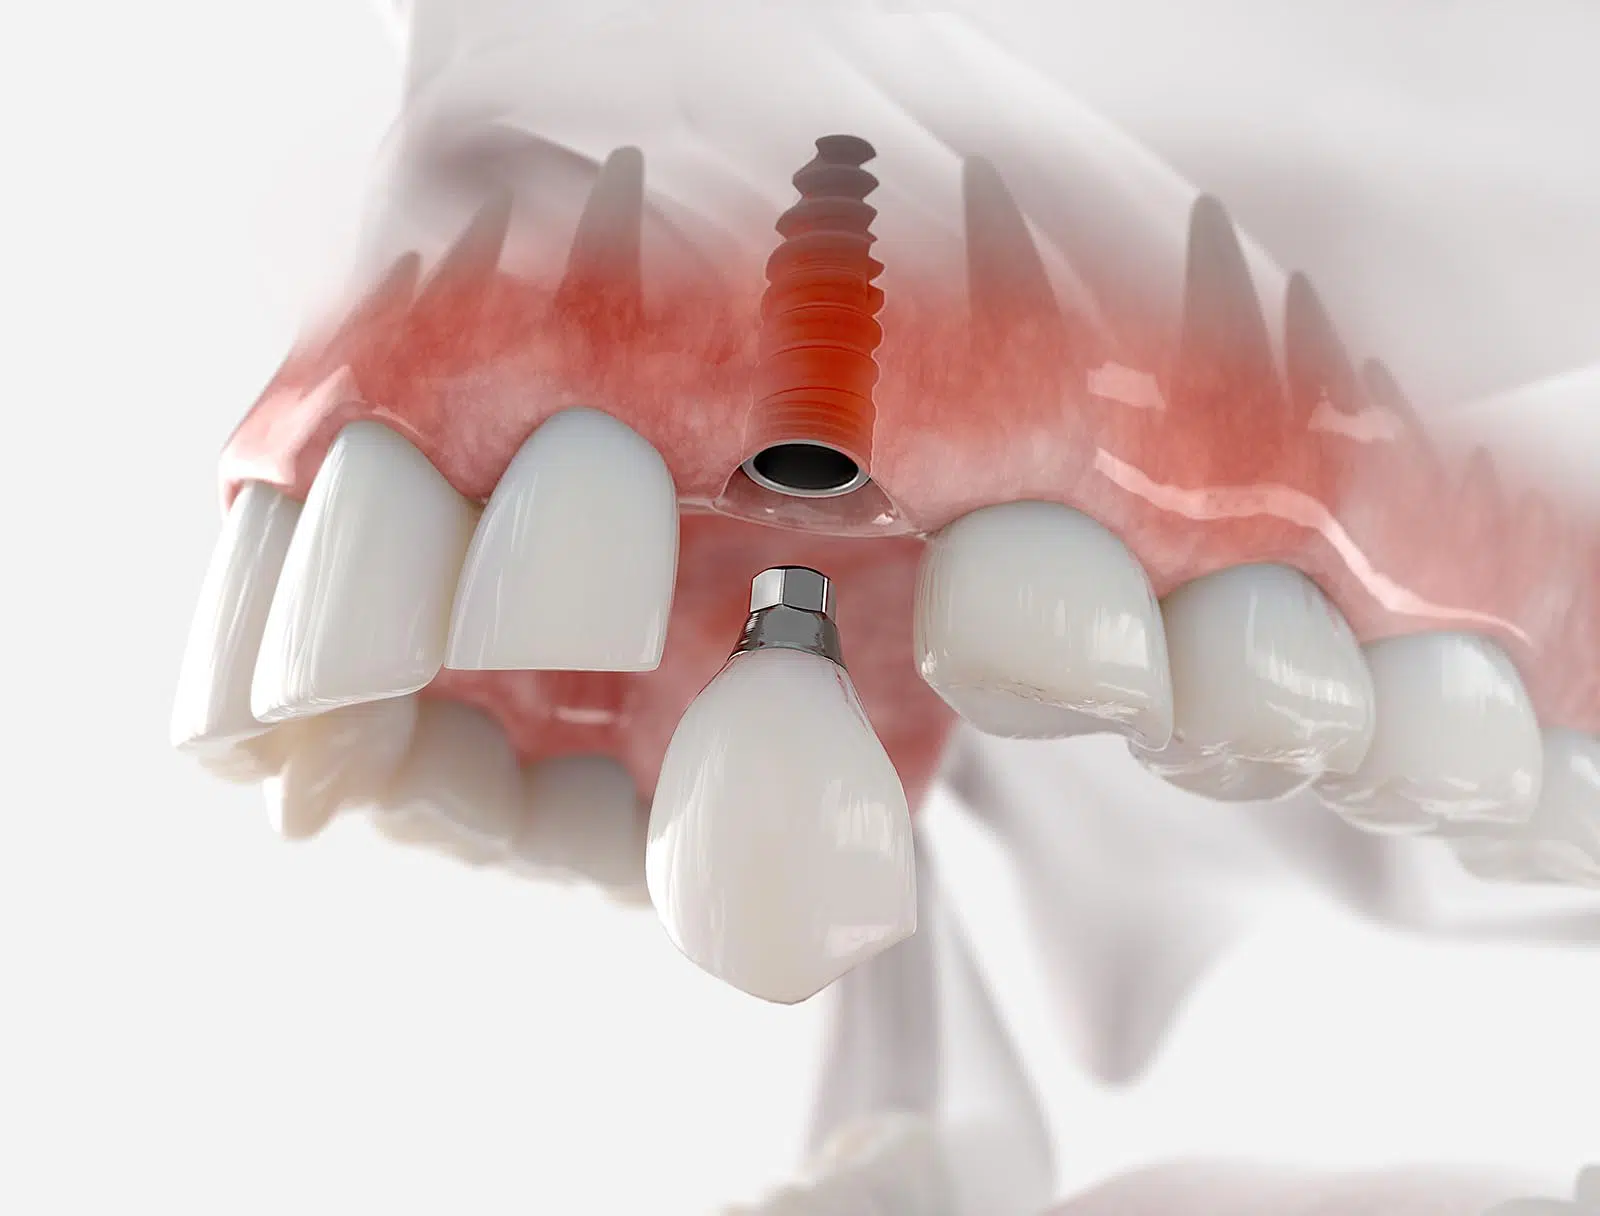 Broken-tooth-implant